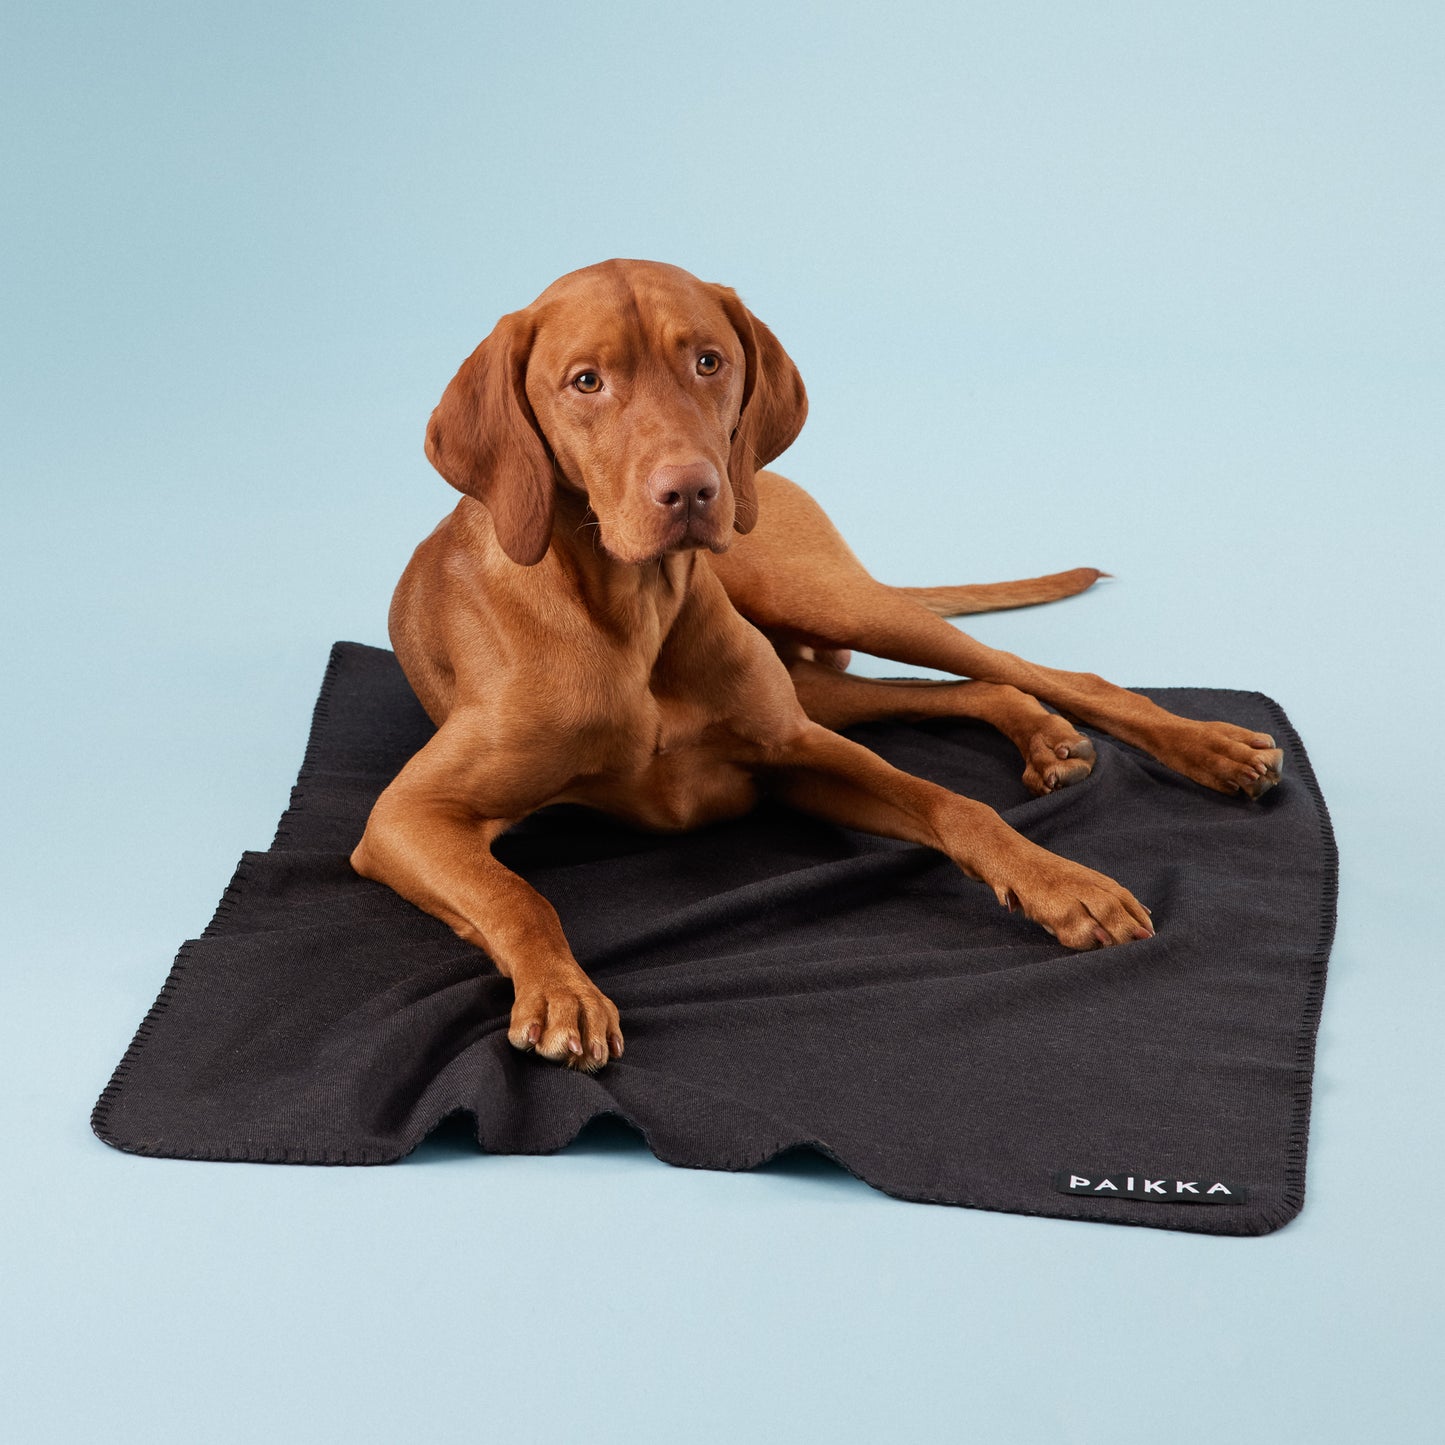 PAiKKA | Decke zur Erholung schwarz/grau | Recovery Blanket for Pets black/grey